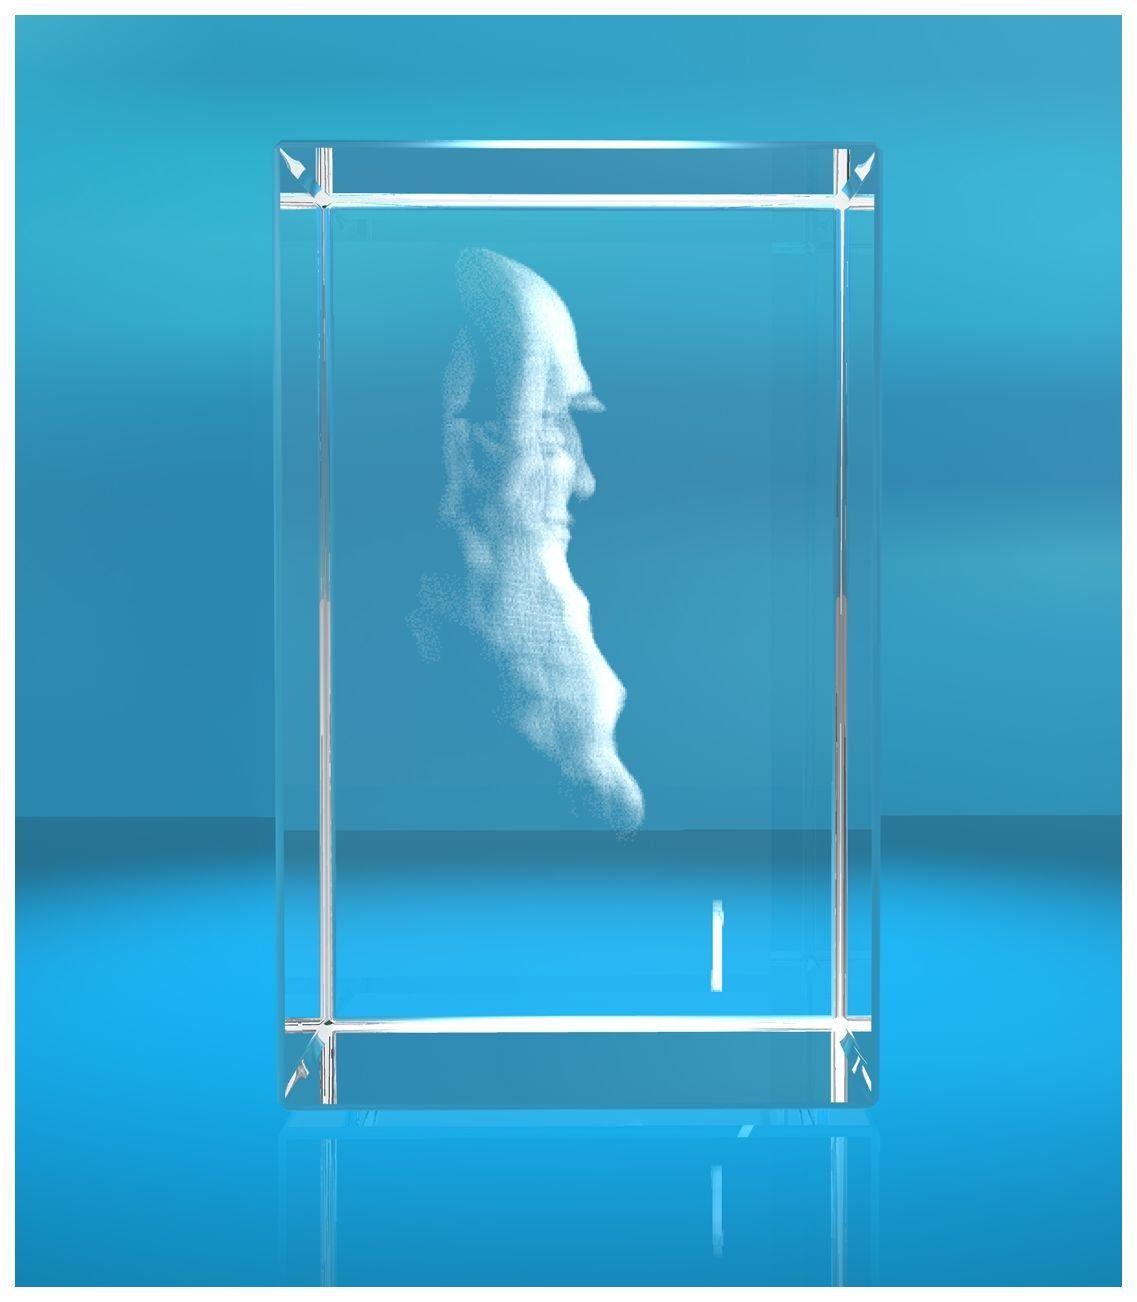 Hochwertige I Da Leonardo Made 3D Glasquader Germany, Vinci, in Geschenkbox, Autogramm Familienbetrieb Dekofigur 3D VIP-LASER I